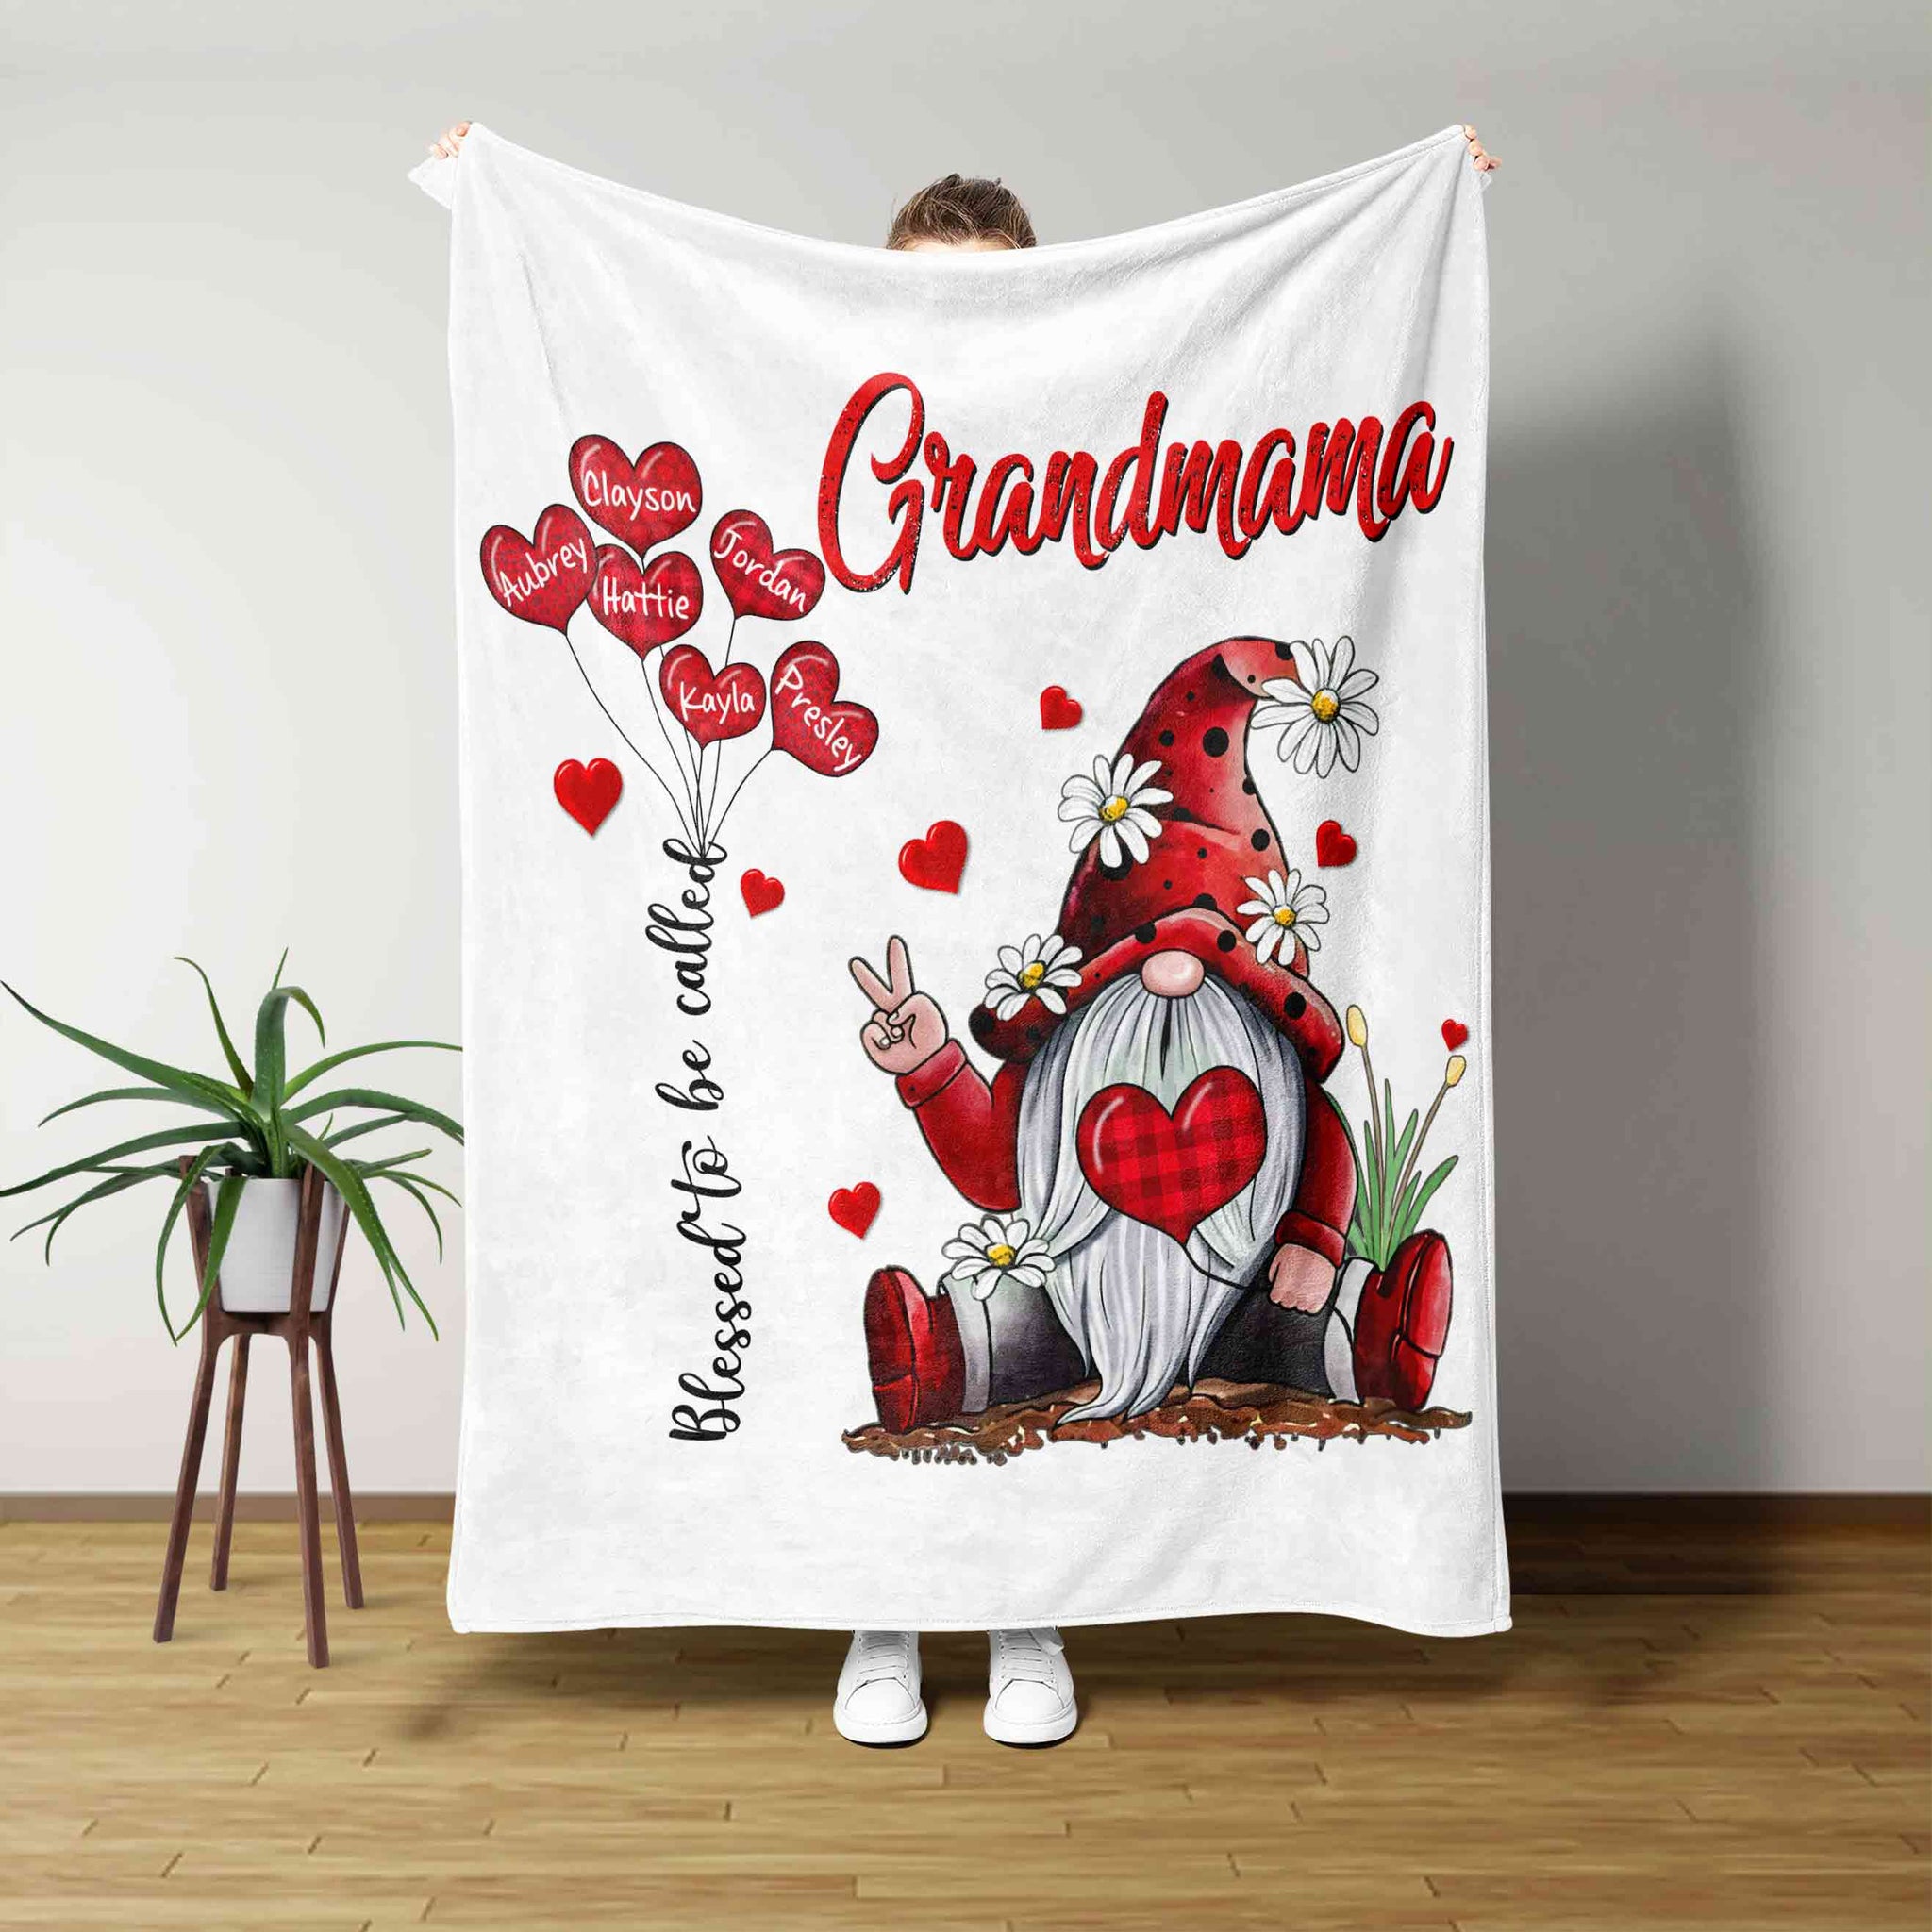 Grandmama Blanket, Gnome Blanket, Daisy Blanket, Heart Blanket, Custom Name Blanket, Gift Blanket